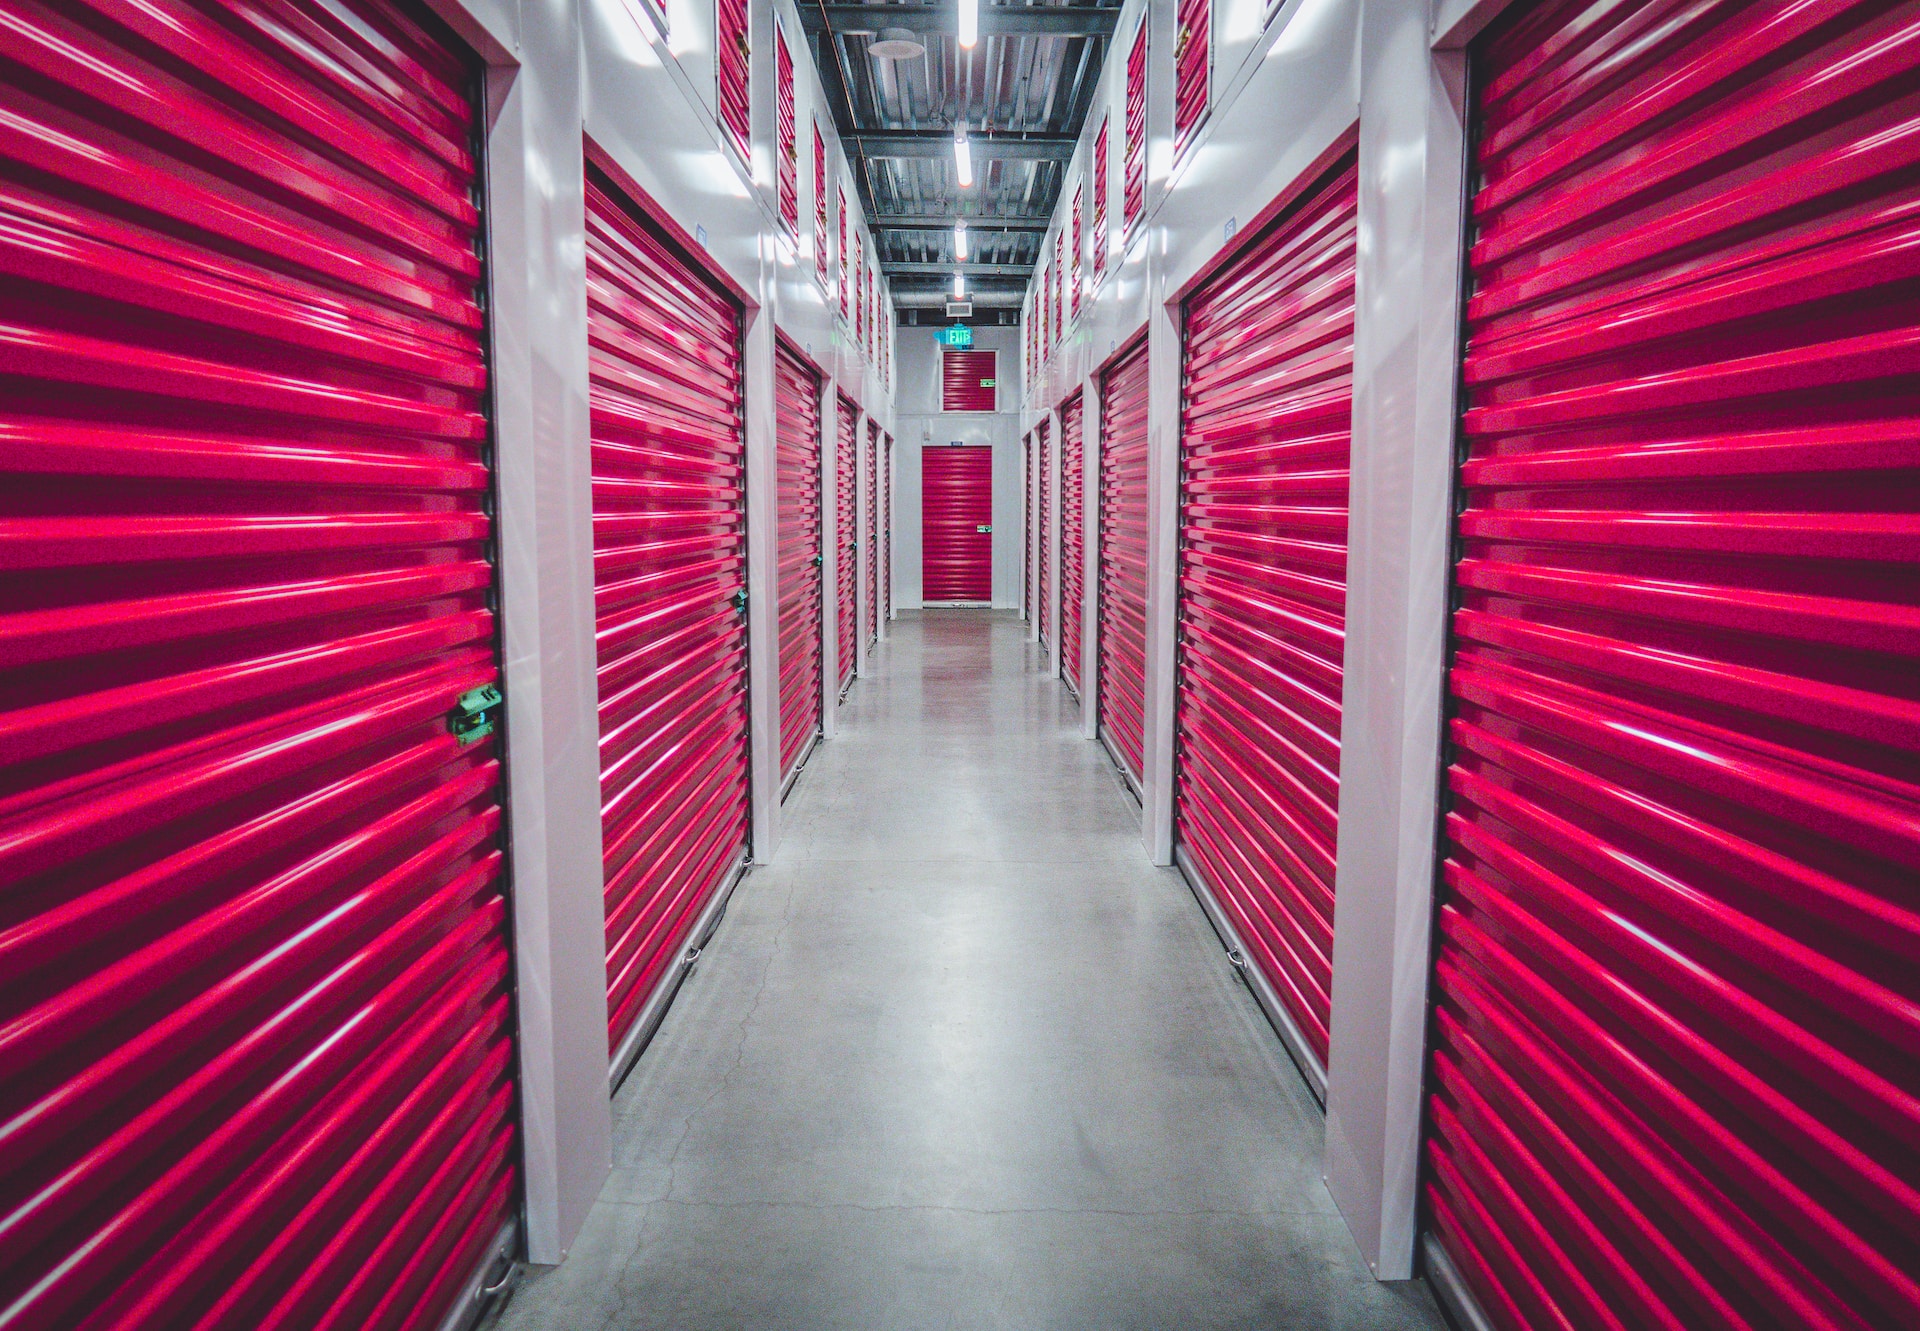 A hallway with red storage units